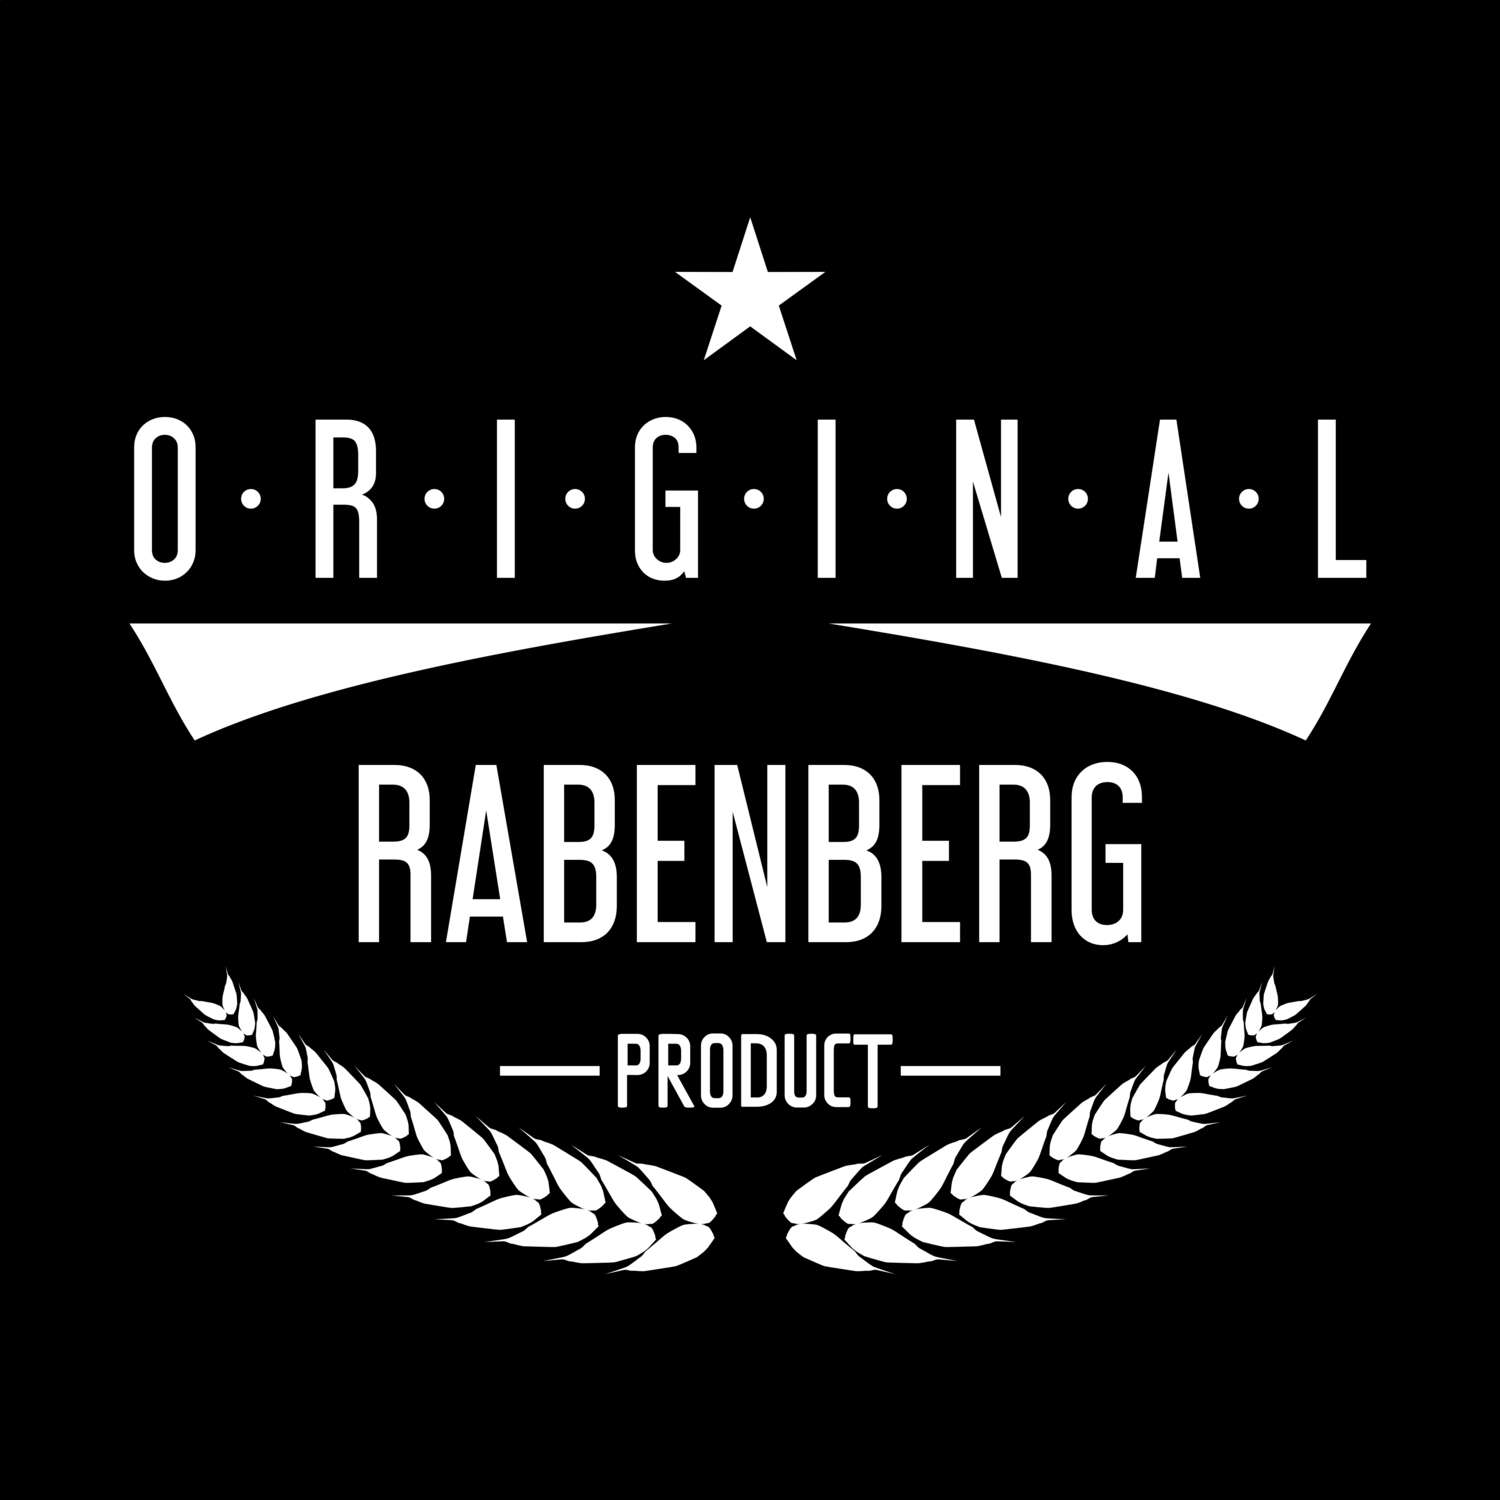 Rabenberg T-Shirt »Original Product«